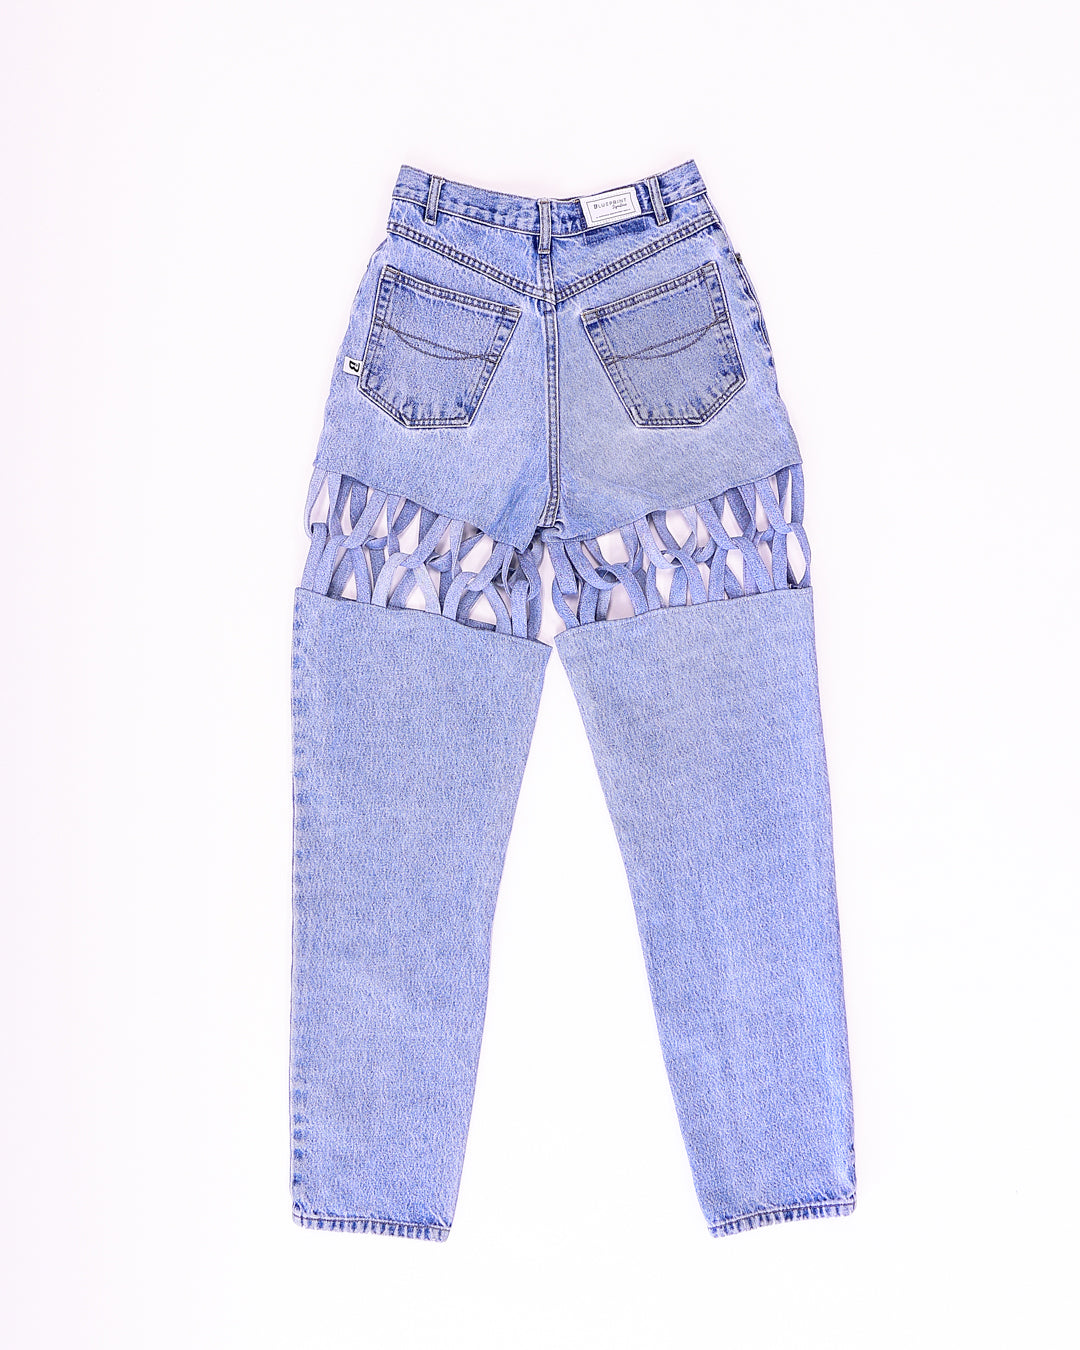 Criss Cross Jeans (size 2)